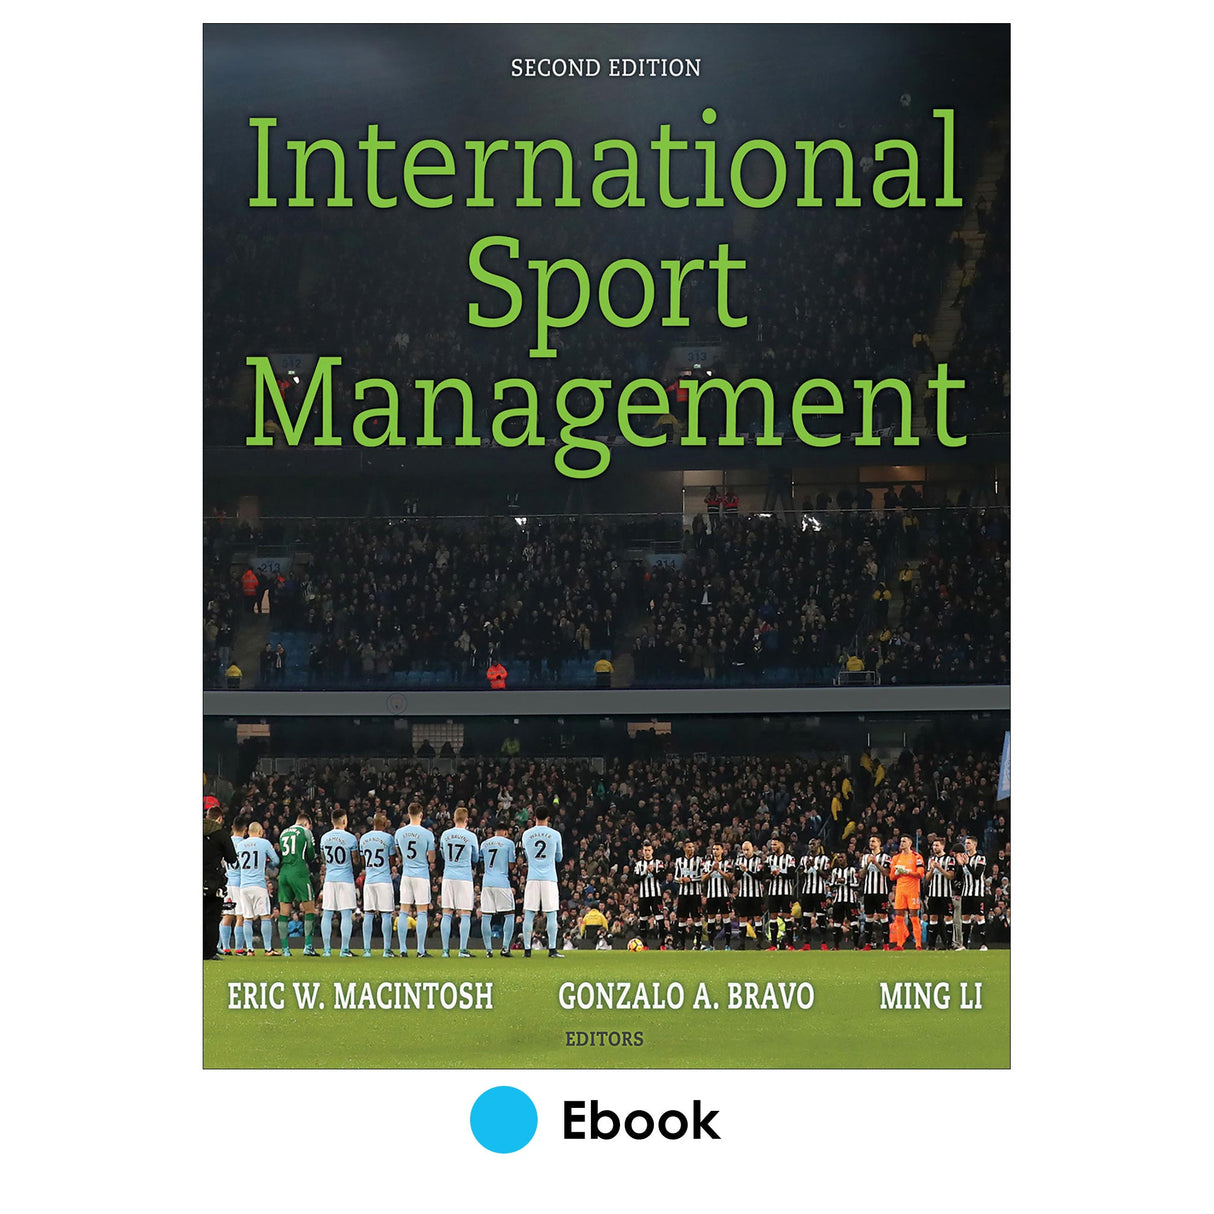 International Sport Management 2nd Edition epub